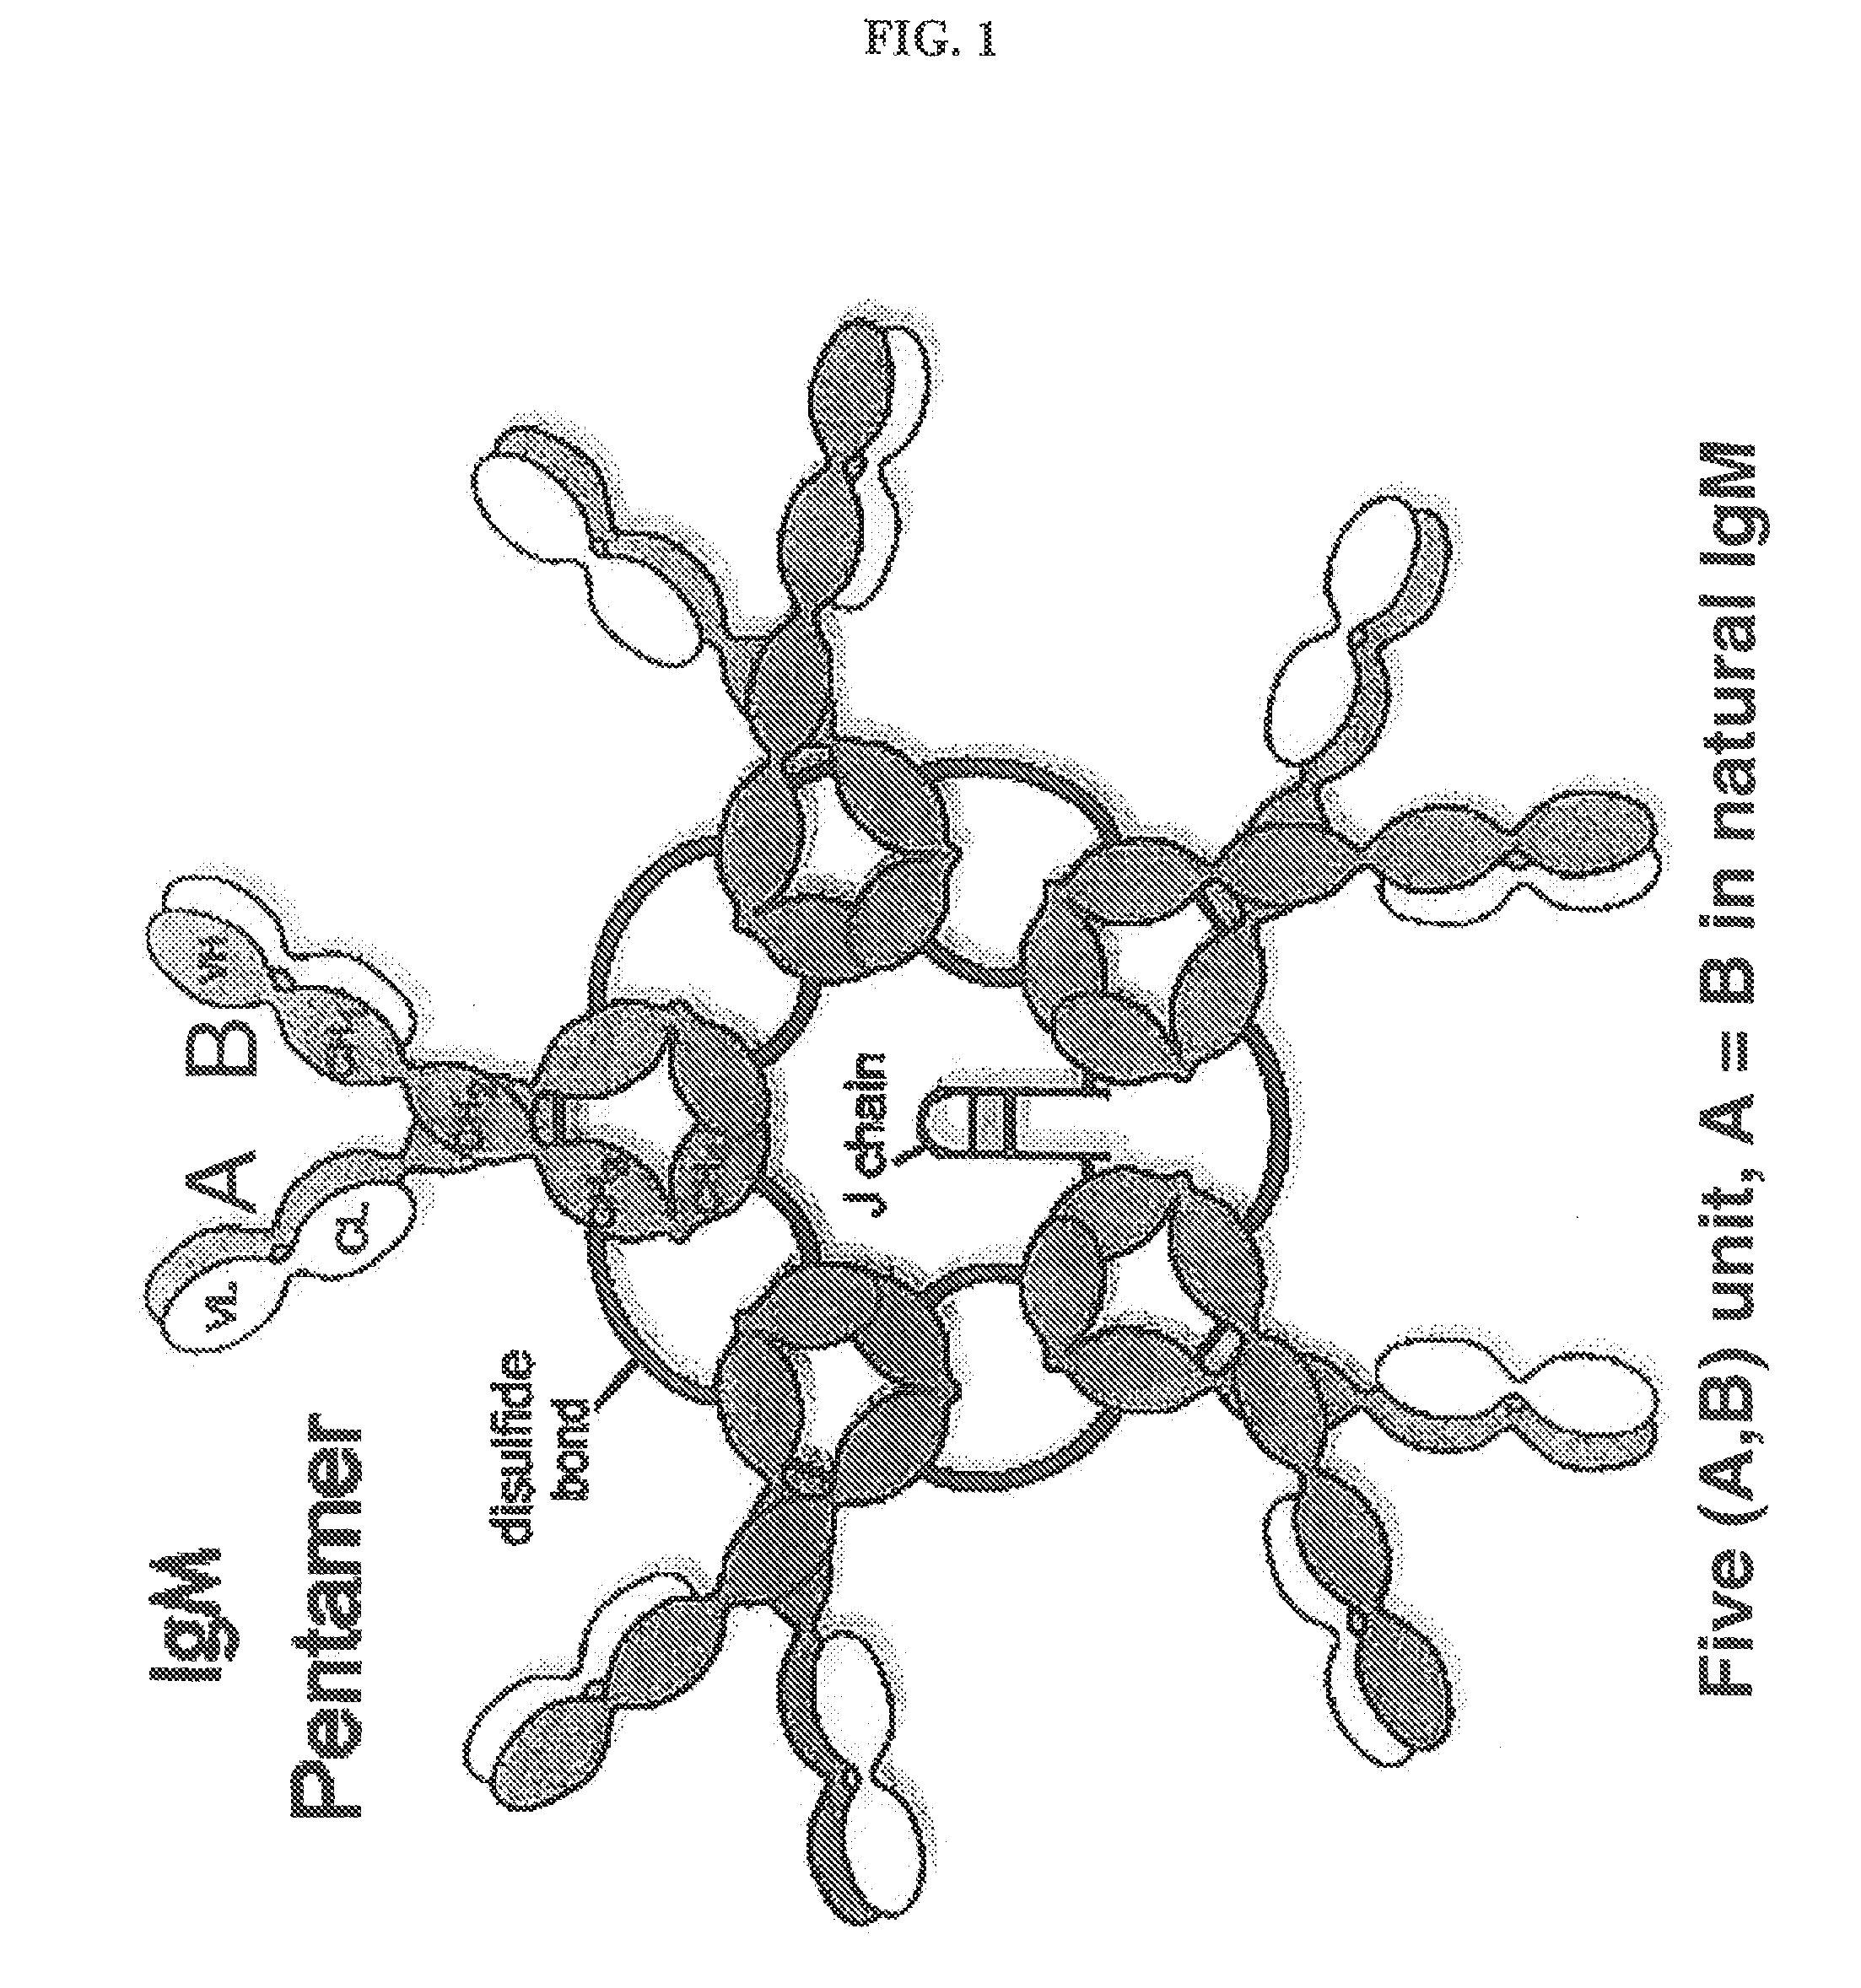 Constant chain modified bispecific, penta- and hexavalent ig-m antibodies